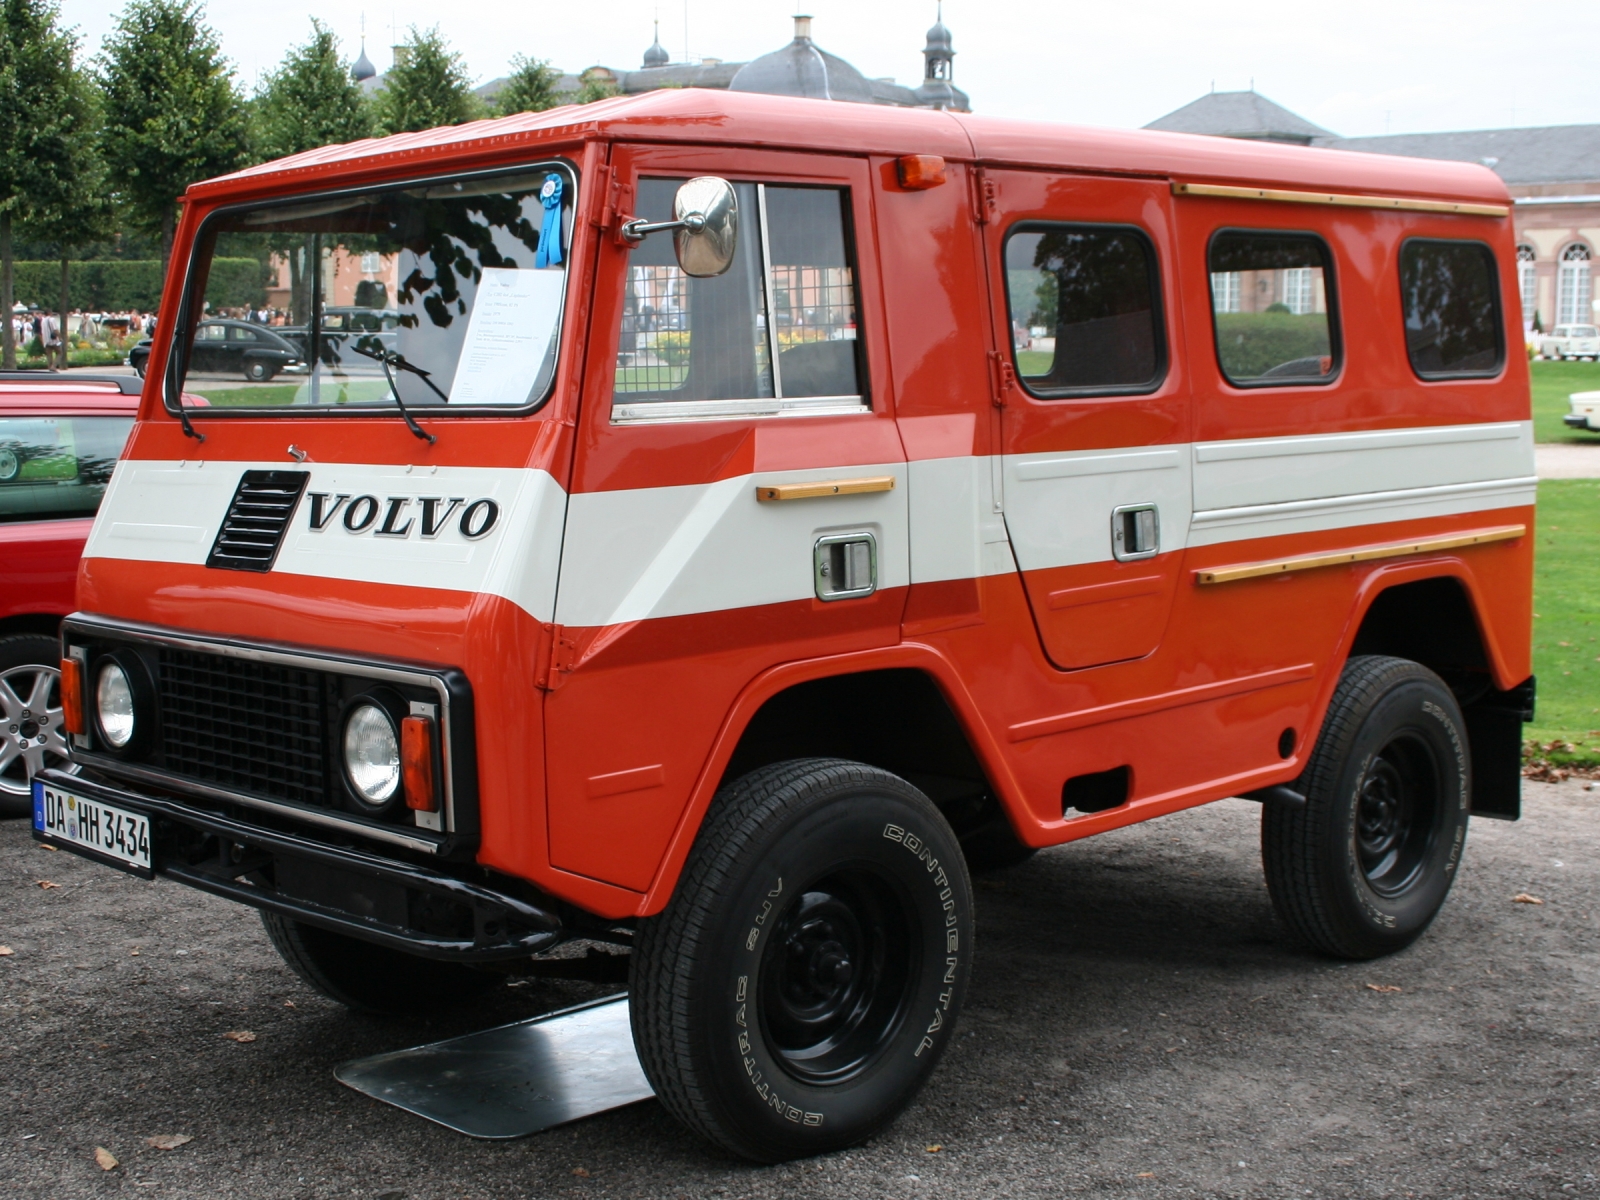 Volvo C202 4x4 Lapplander